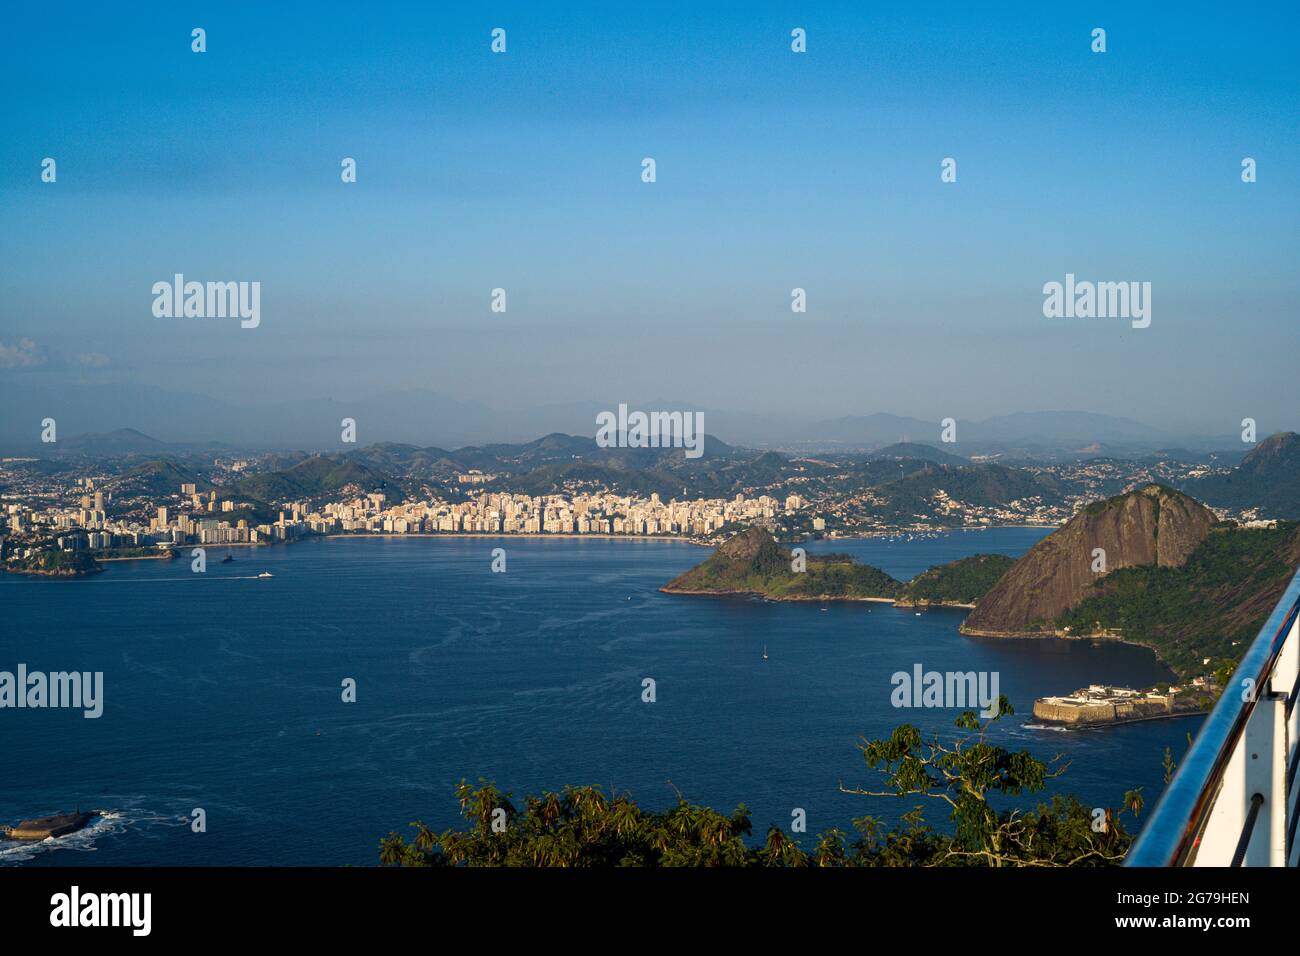 Tramonto visto dal Pan di zucchero, Rio de Janeiro, Brasile Foto Stock